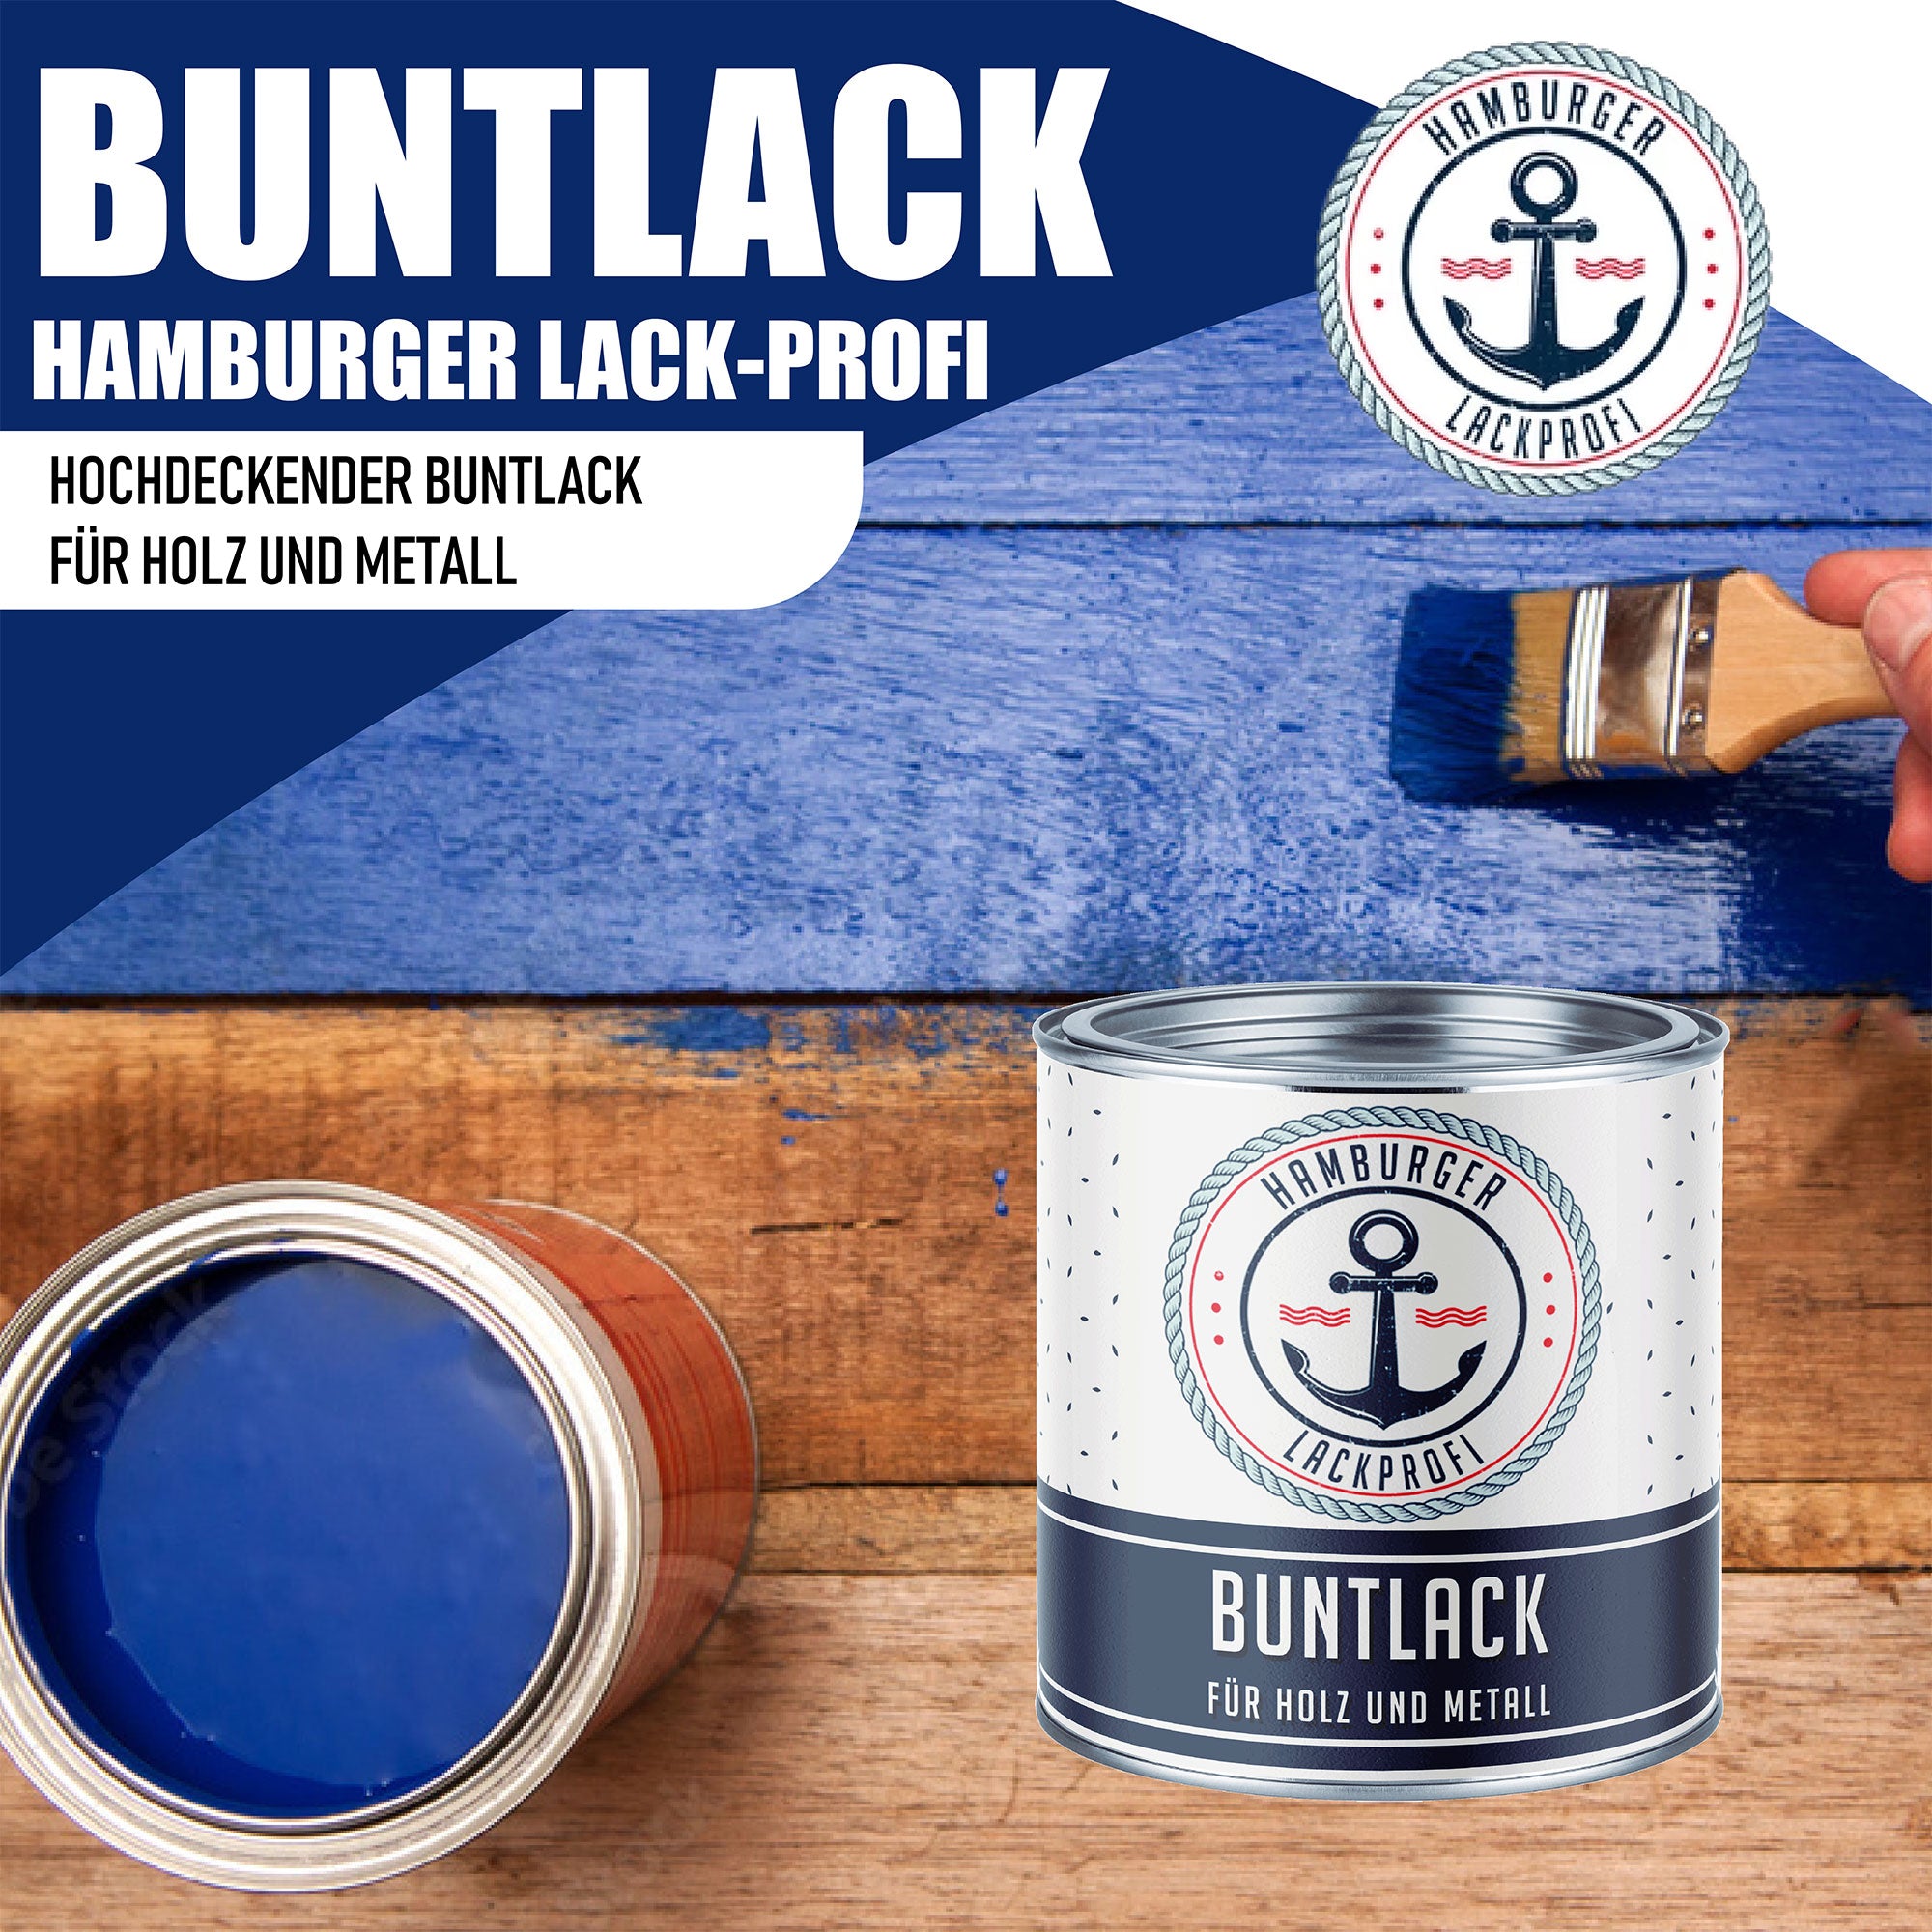 Hamburger Lack-Profi Buntlack in Zinkgelb RAL 1018 mit Lackierset (X300) & Verdünnung (1 L) - 30% Sparangebot